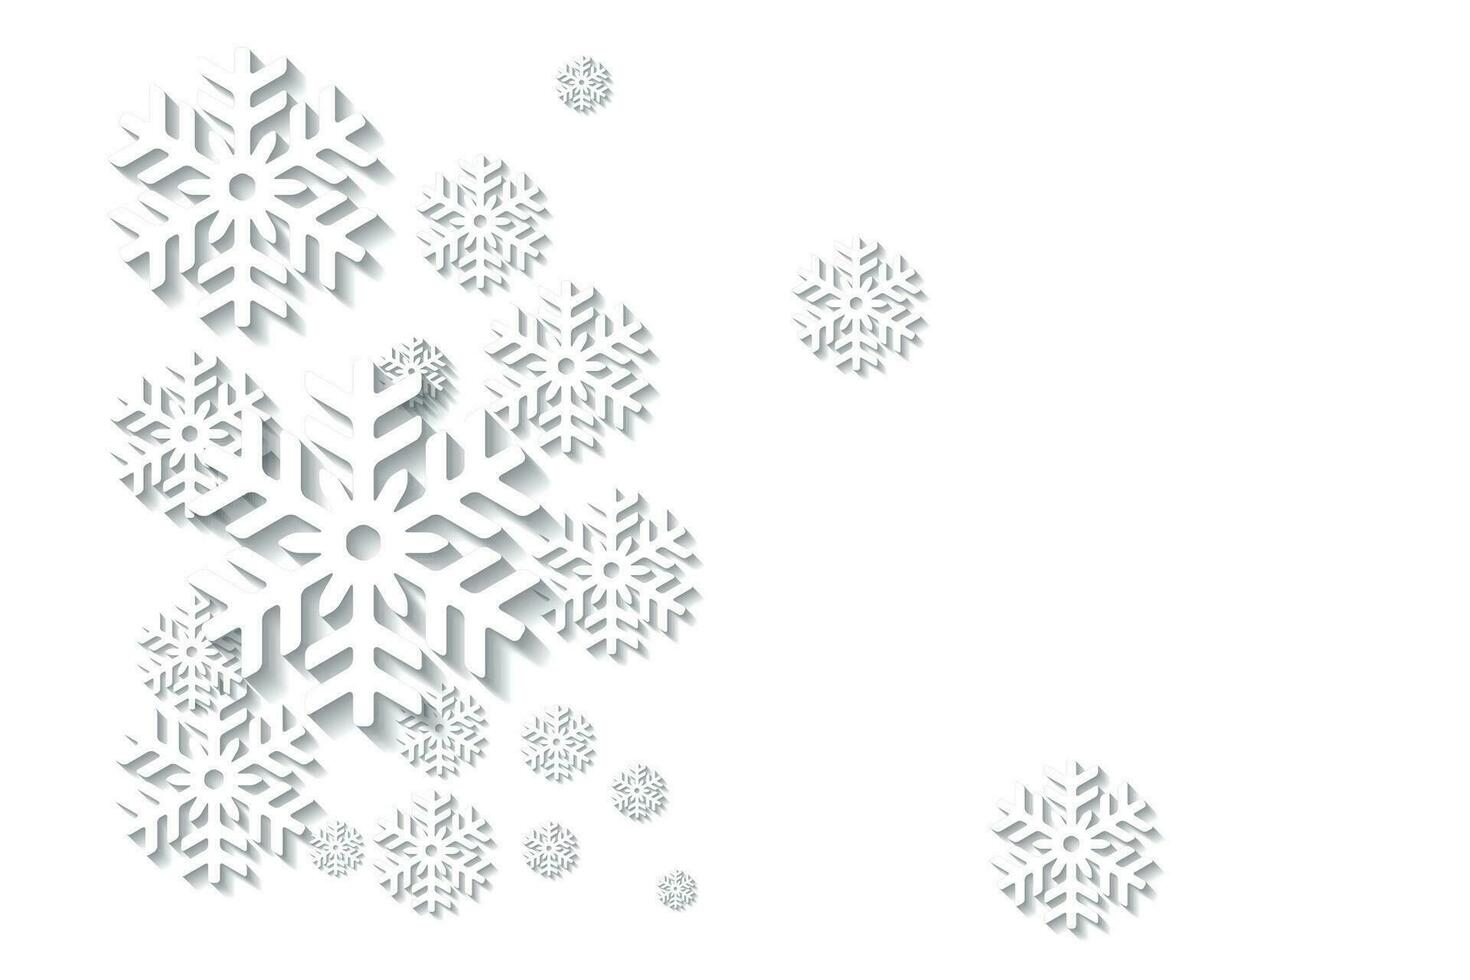 Winter frozen background stock illustration vector